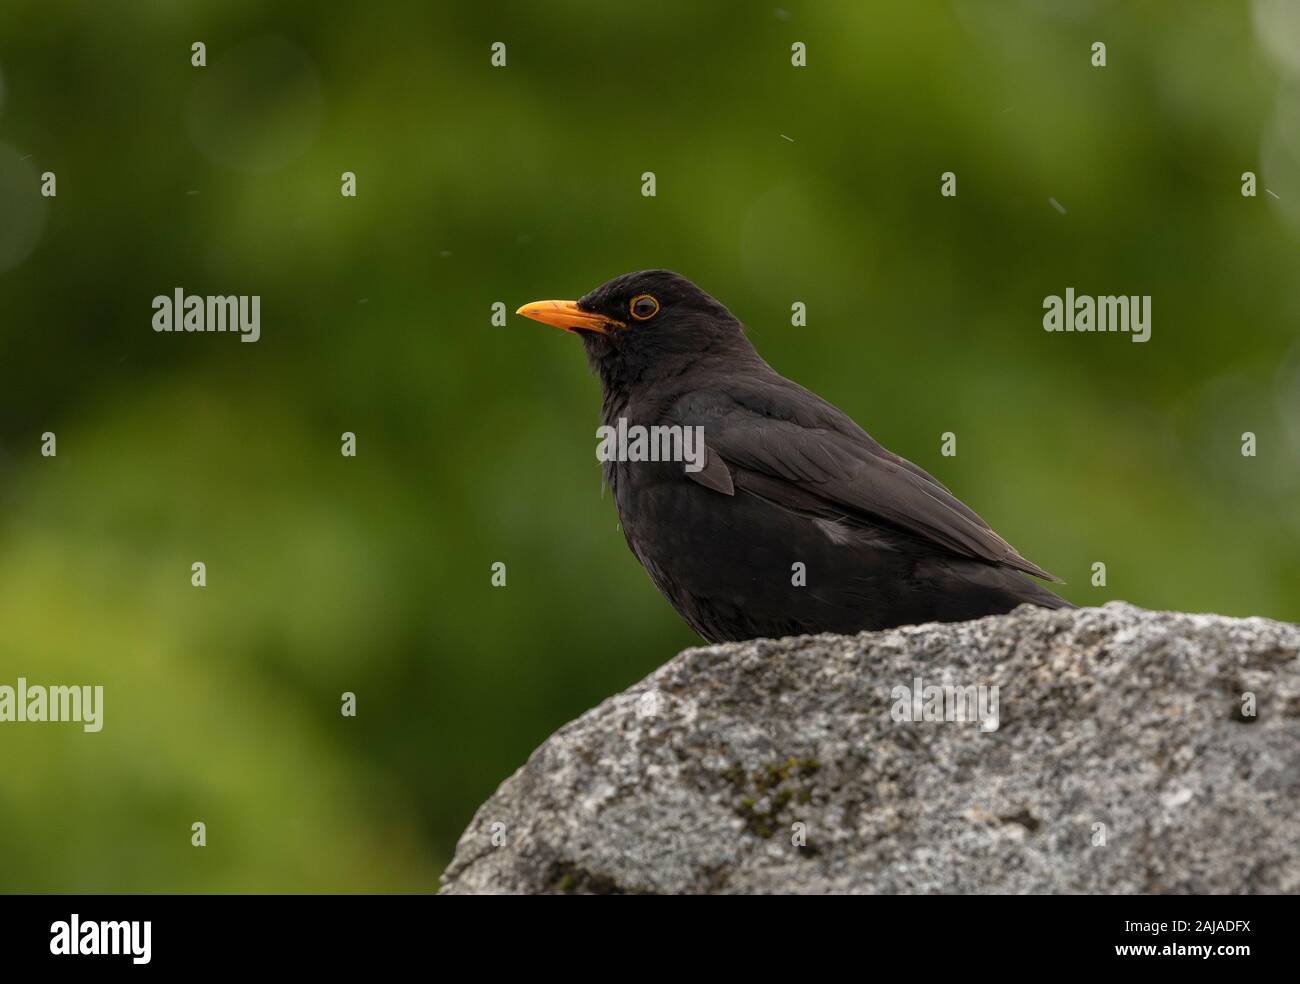 Male Blackbird, perched on rock, in breeding season. Stock Photo